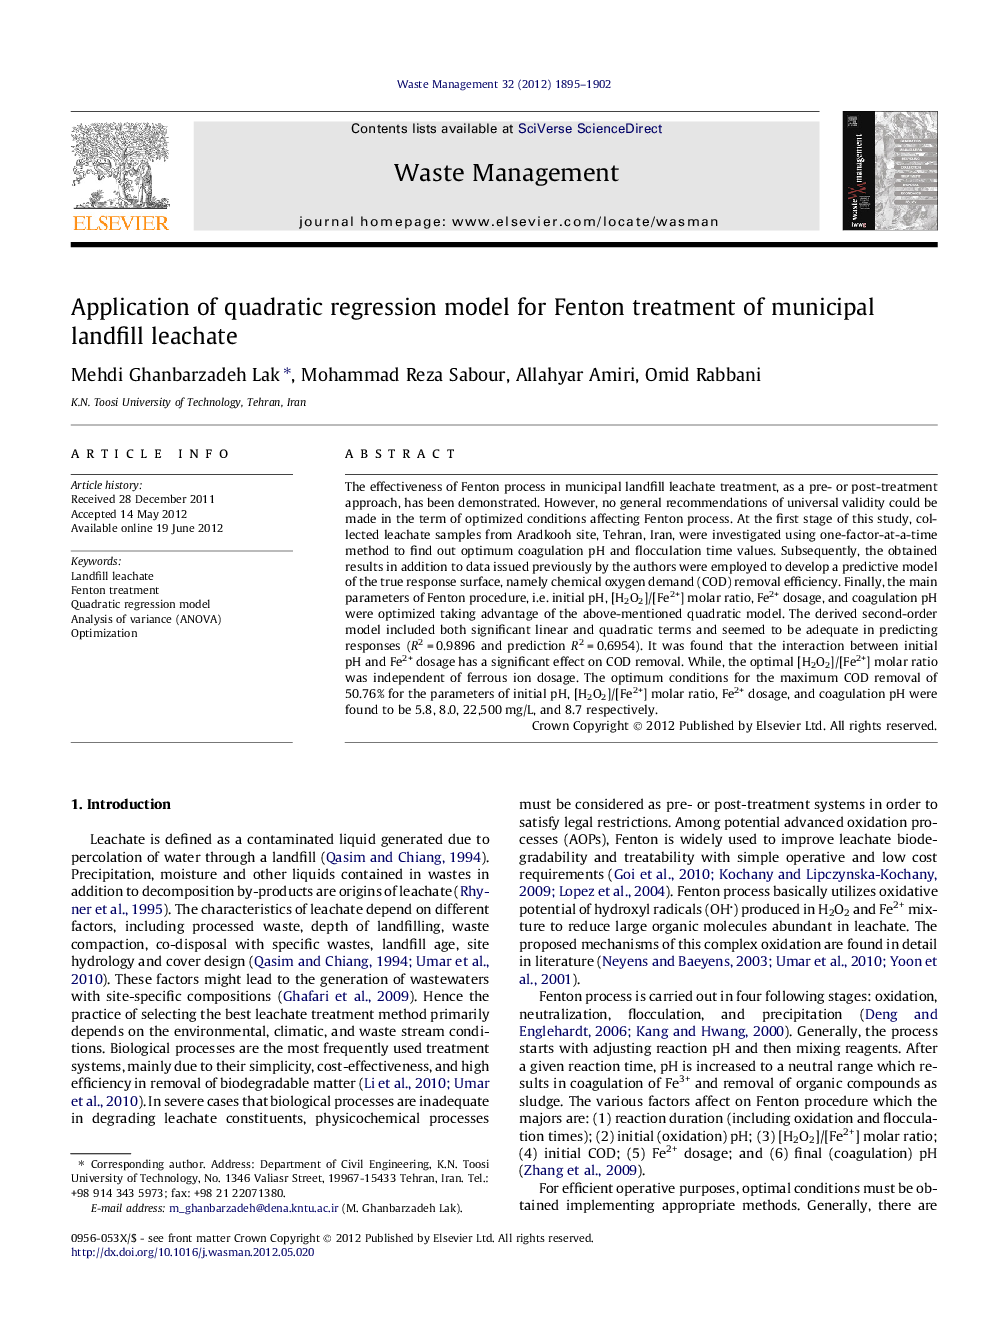 Application of quadratic regression model for Fenton treatment of municipal landfill leachate